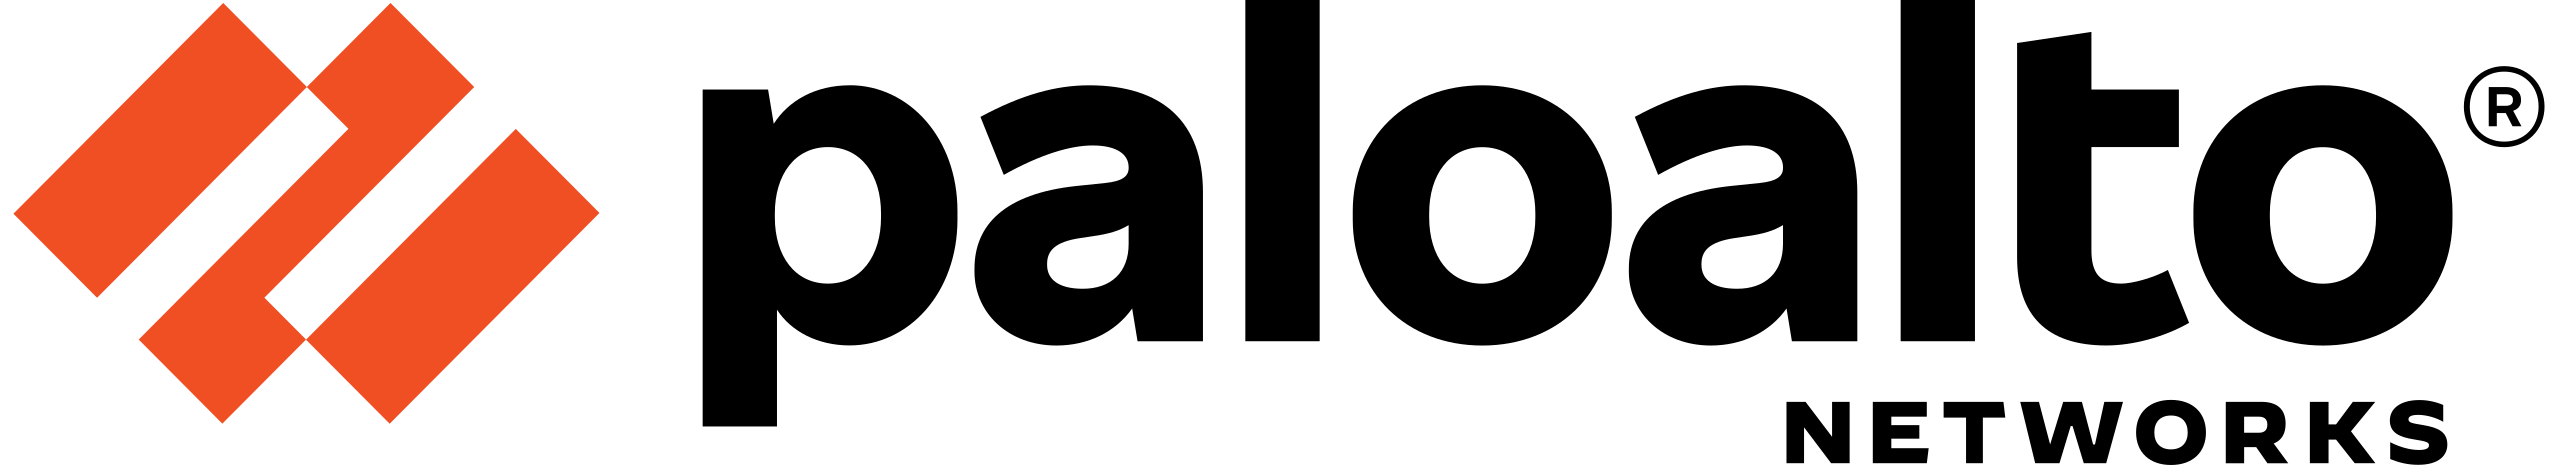 PaloAlto Networks Logo